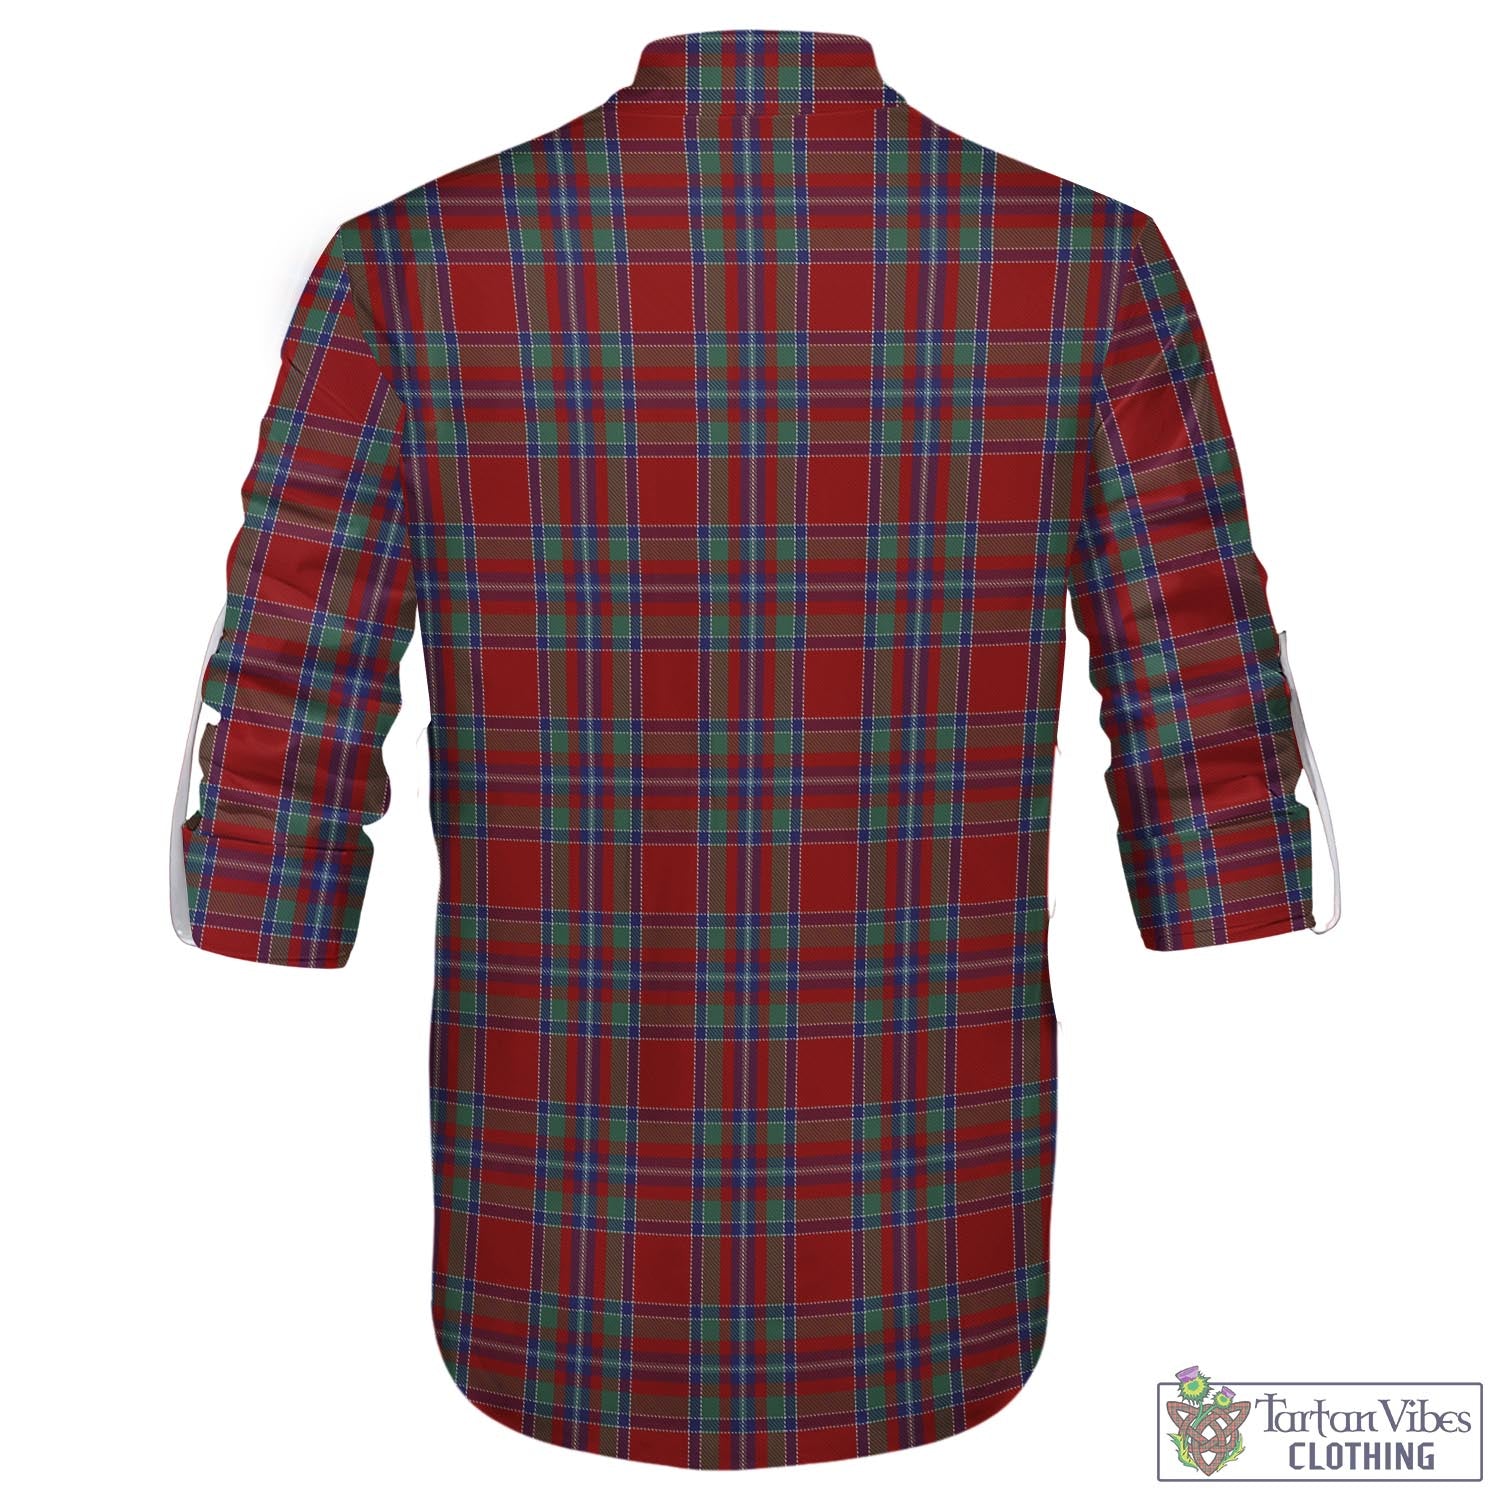 Tartan Vibes Clothing Spens Tartan Men's Scottish Traditional Jacobite Ghillie Kilt Shirt with Family Crest